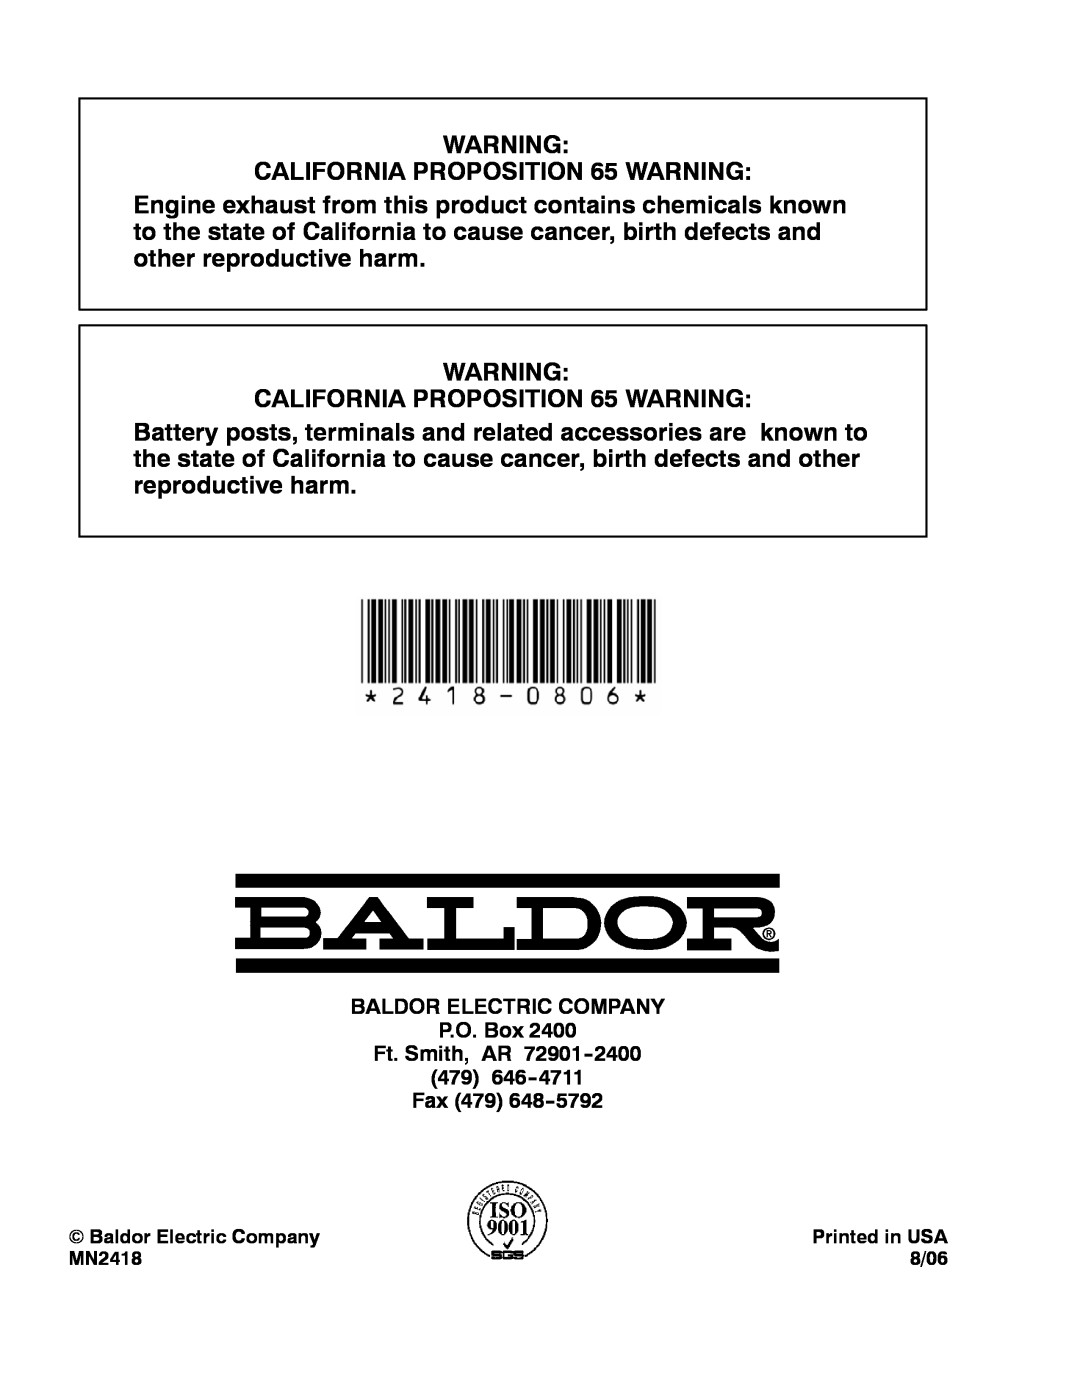 Baldor PG 6000 BALDOR ELECTRIC COMPANY P.O. Box Ft. Smith, AR, 479646-4711 Fax, Baldor Electric Company, 8/06, MN2418 